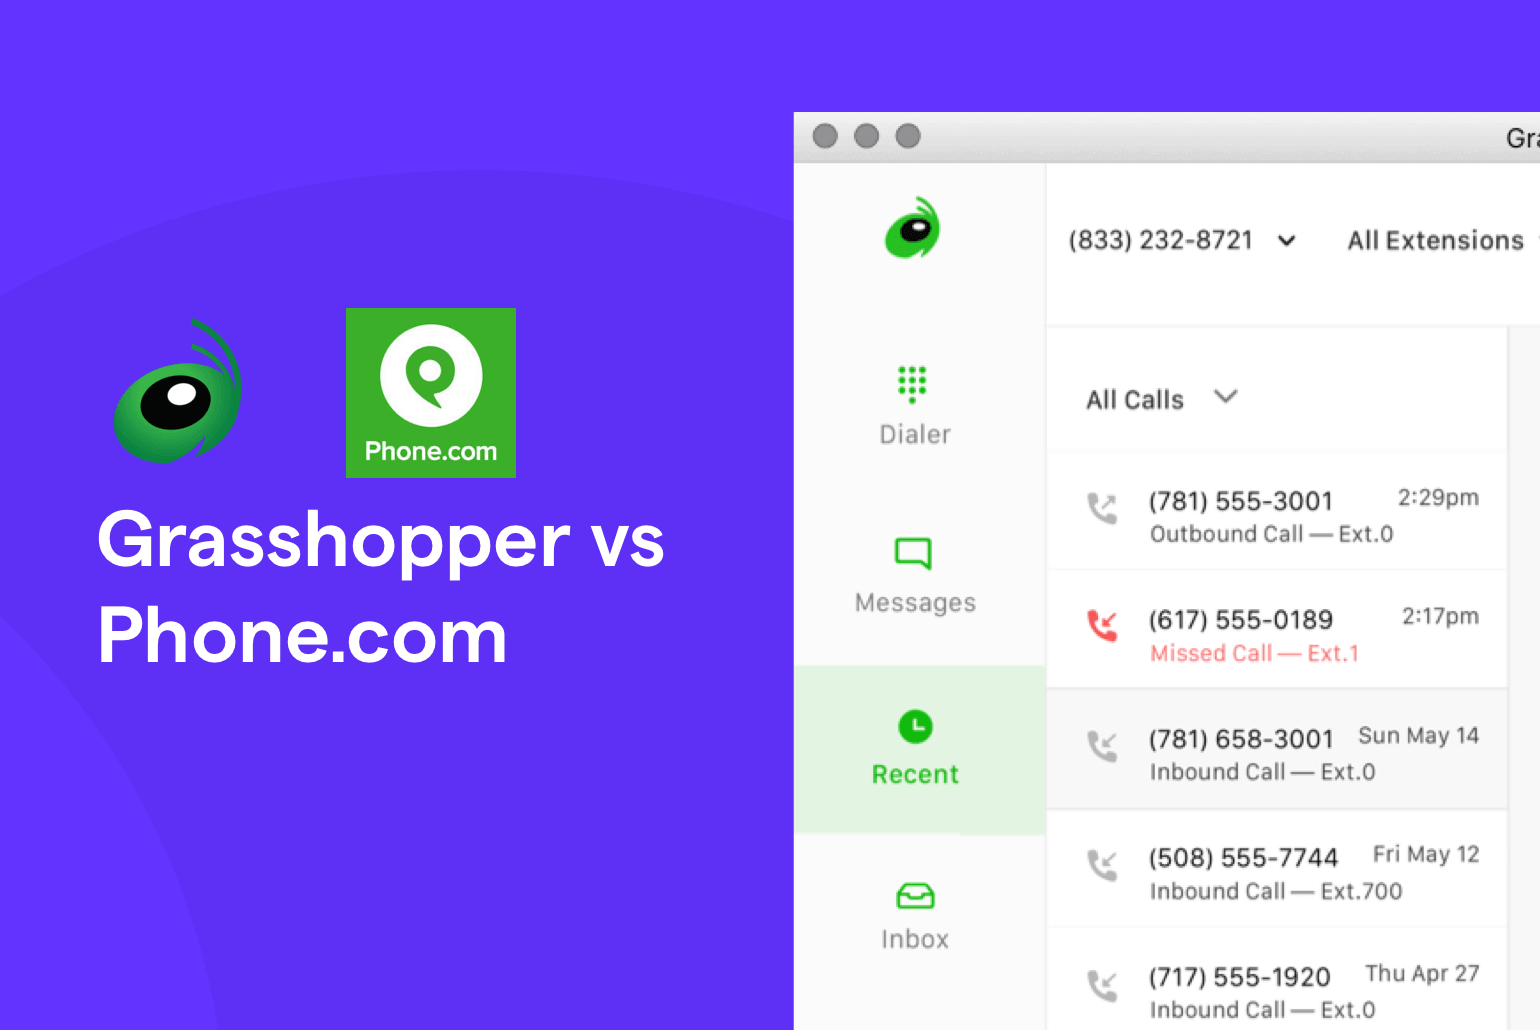 Grasshopper vs Phone.com